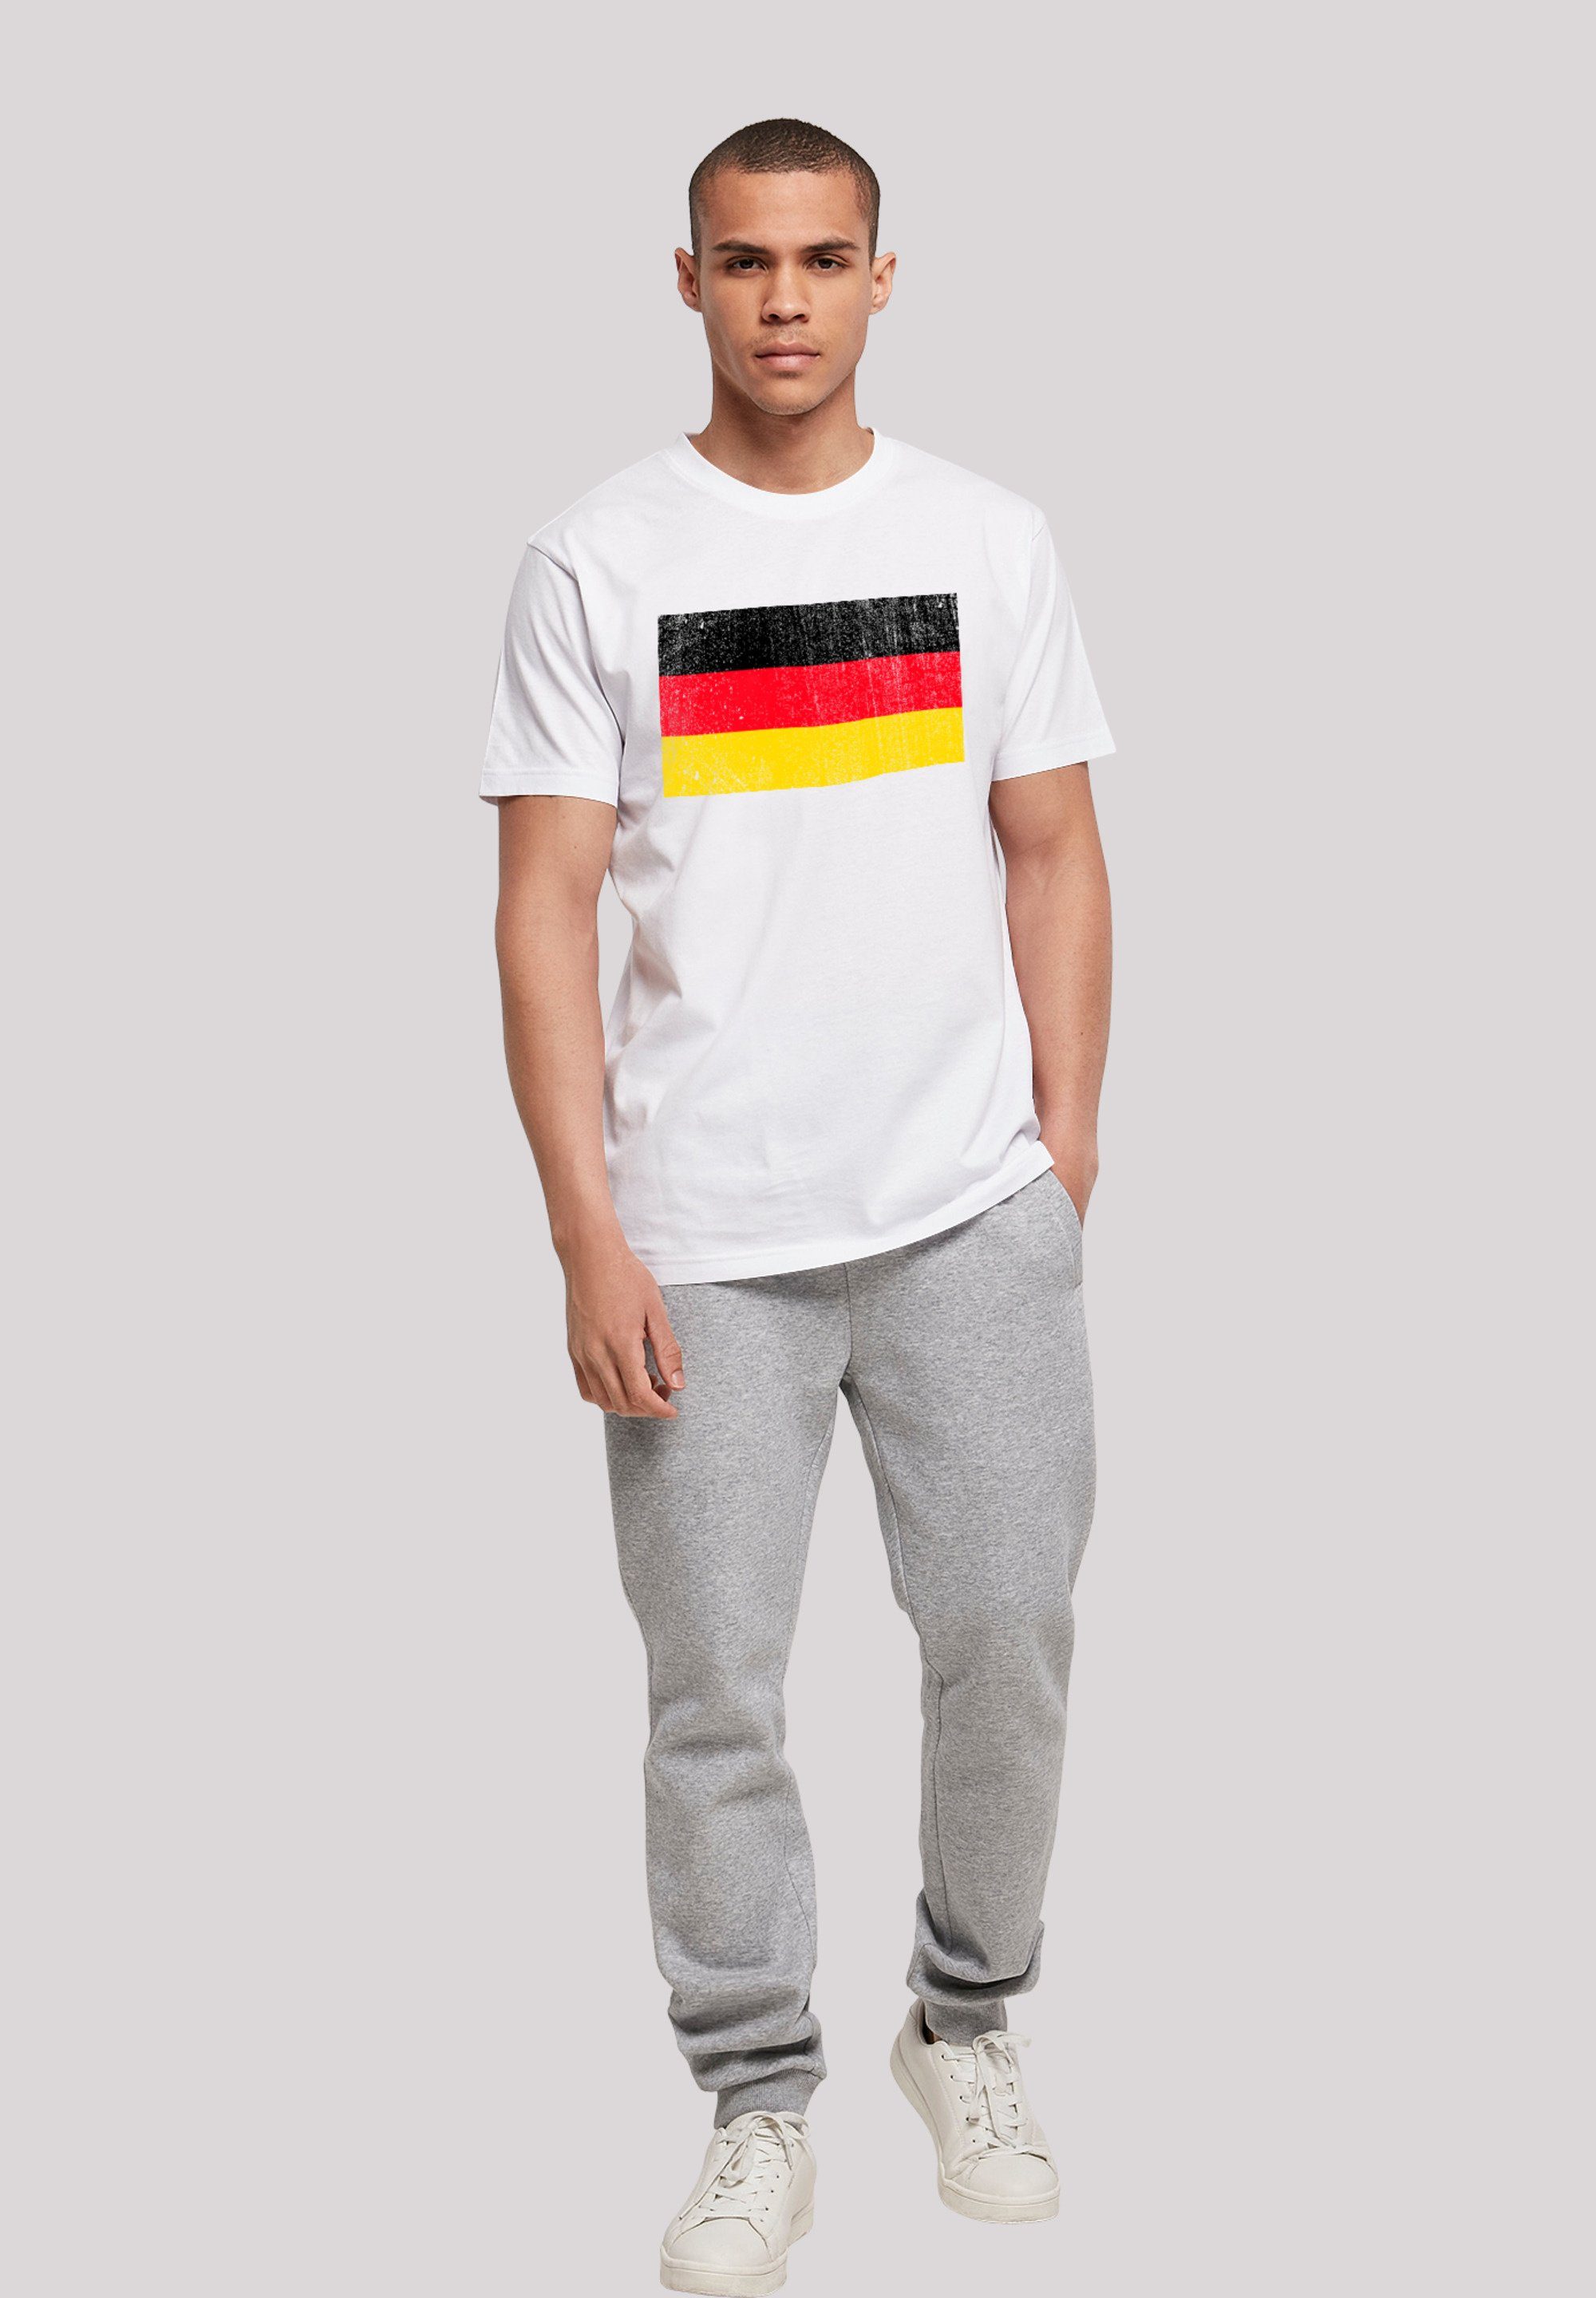 Deutschland T-Shirt Print Germany weiß distressed F4NT4STIC Flagge